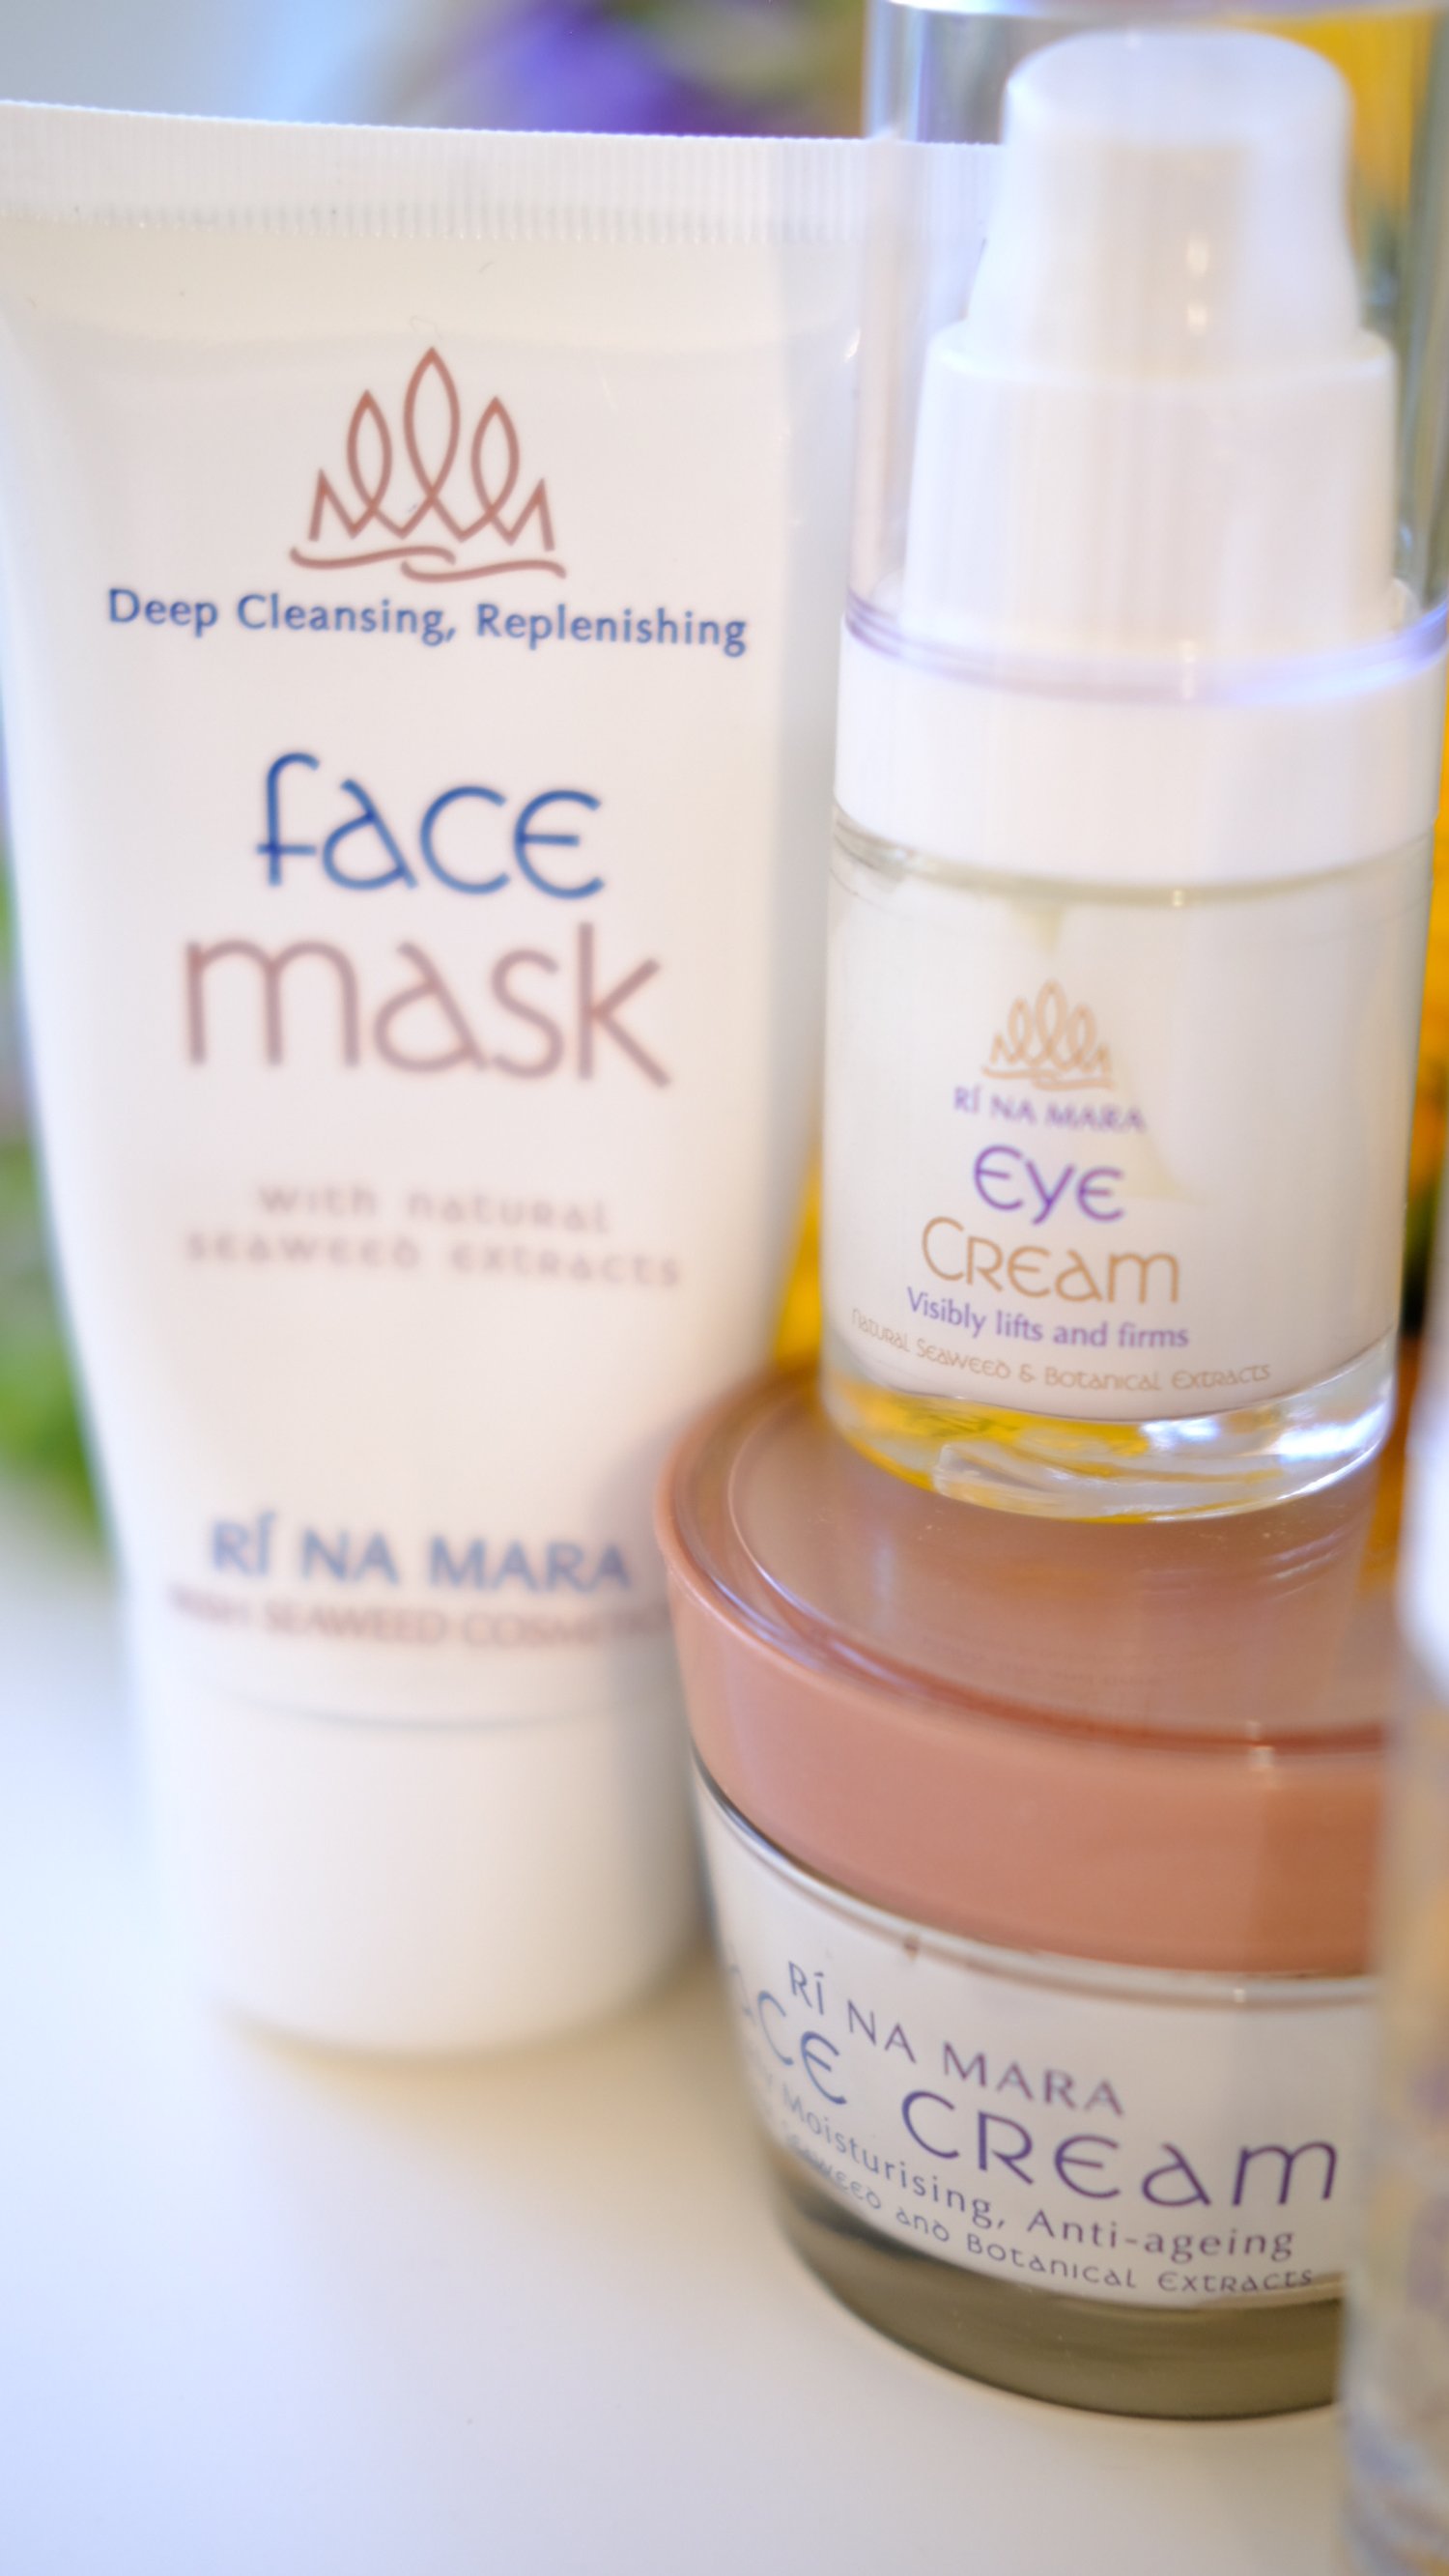 Ri na mara skin care reviews including Ri na mara face mask